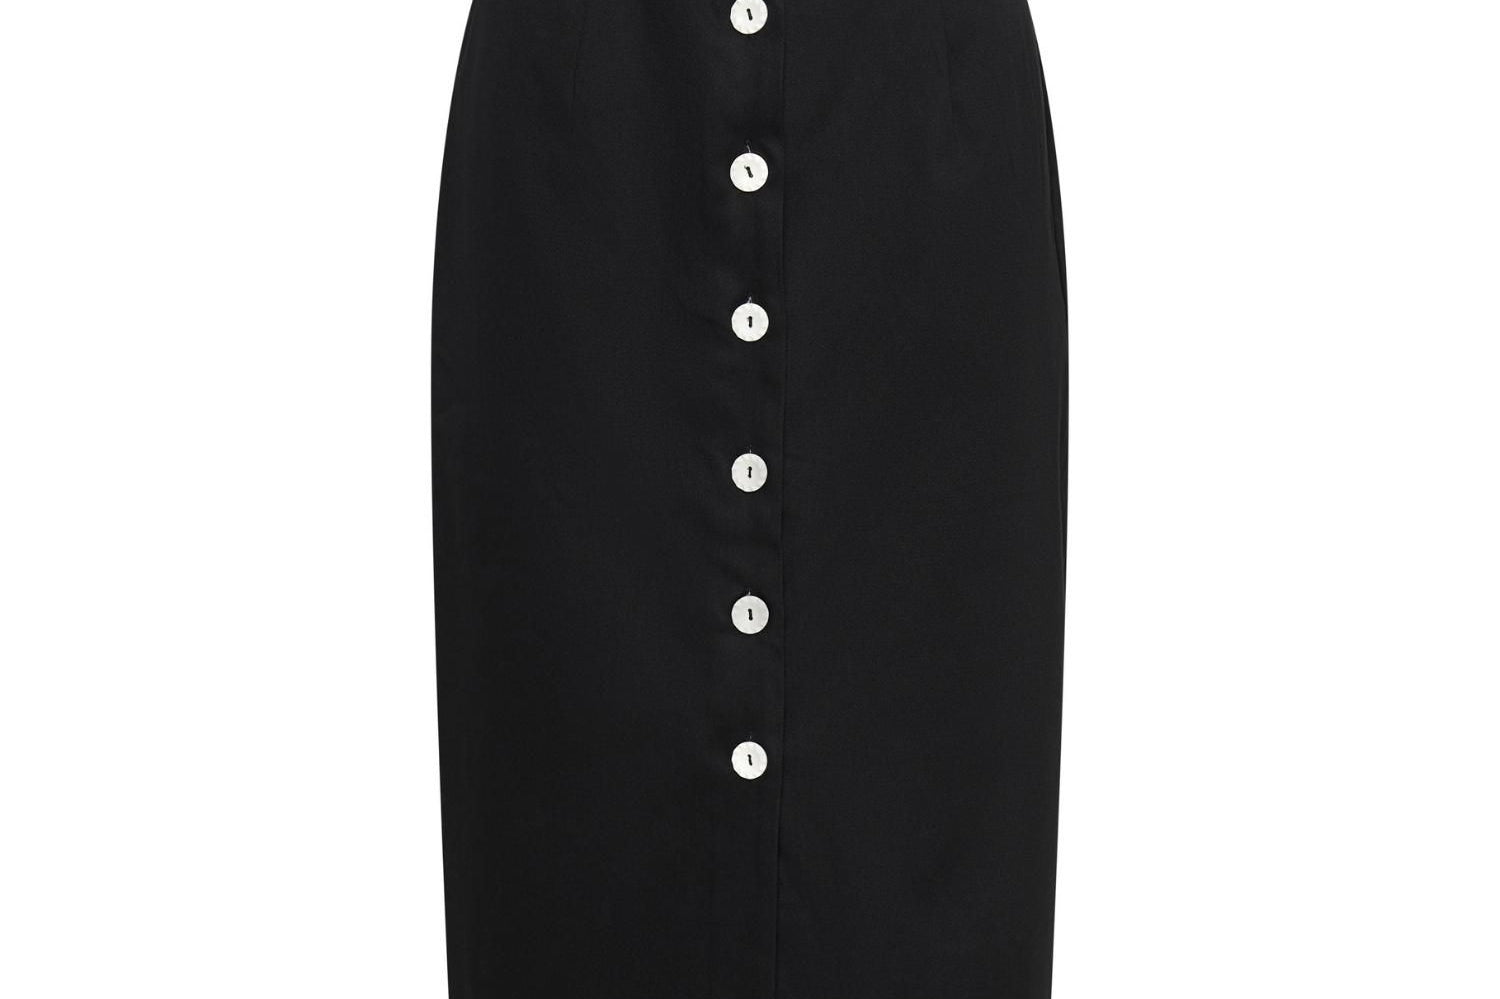 Florence Fluttering Skirt in Black OFFER: GET TOP FREE WHEN YOU BUY SKIRT